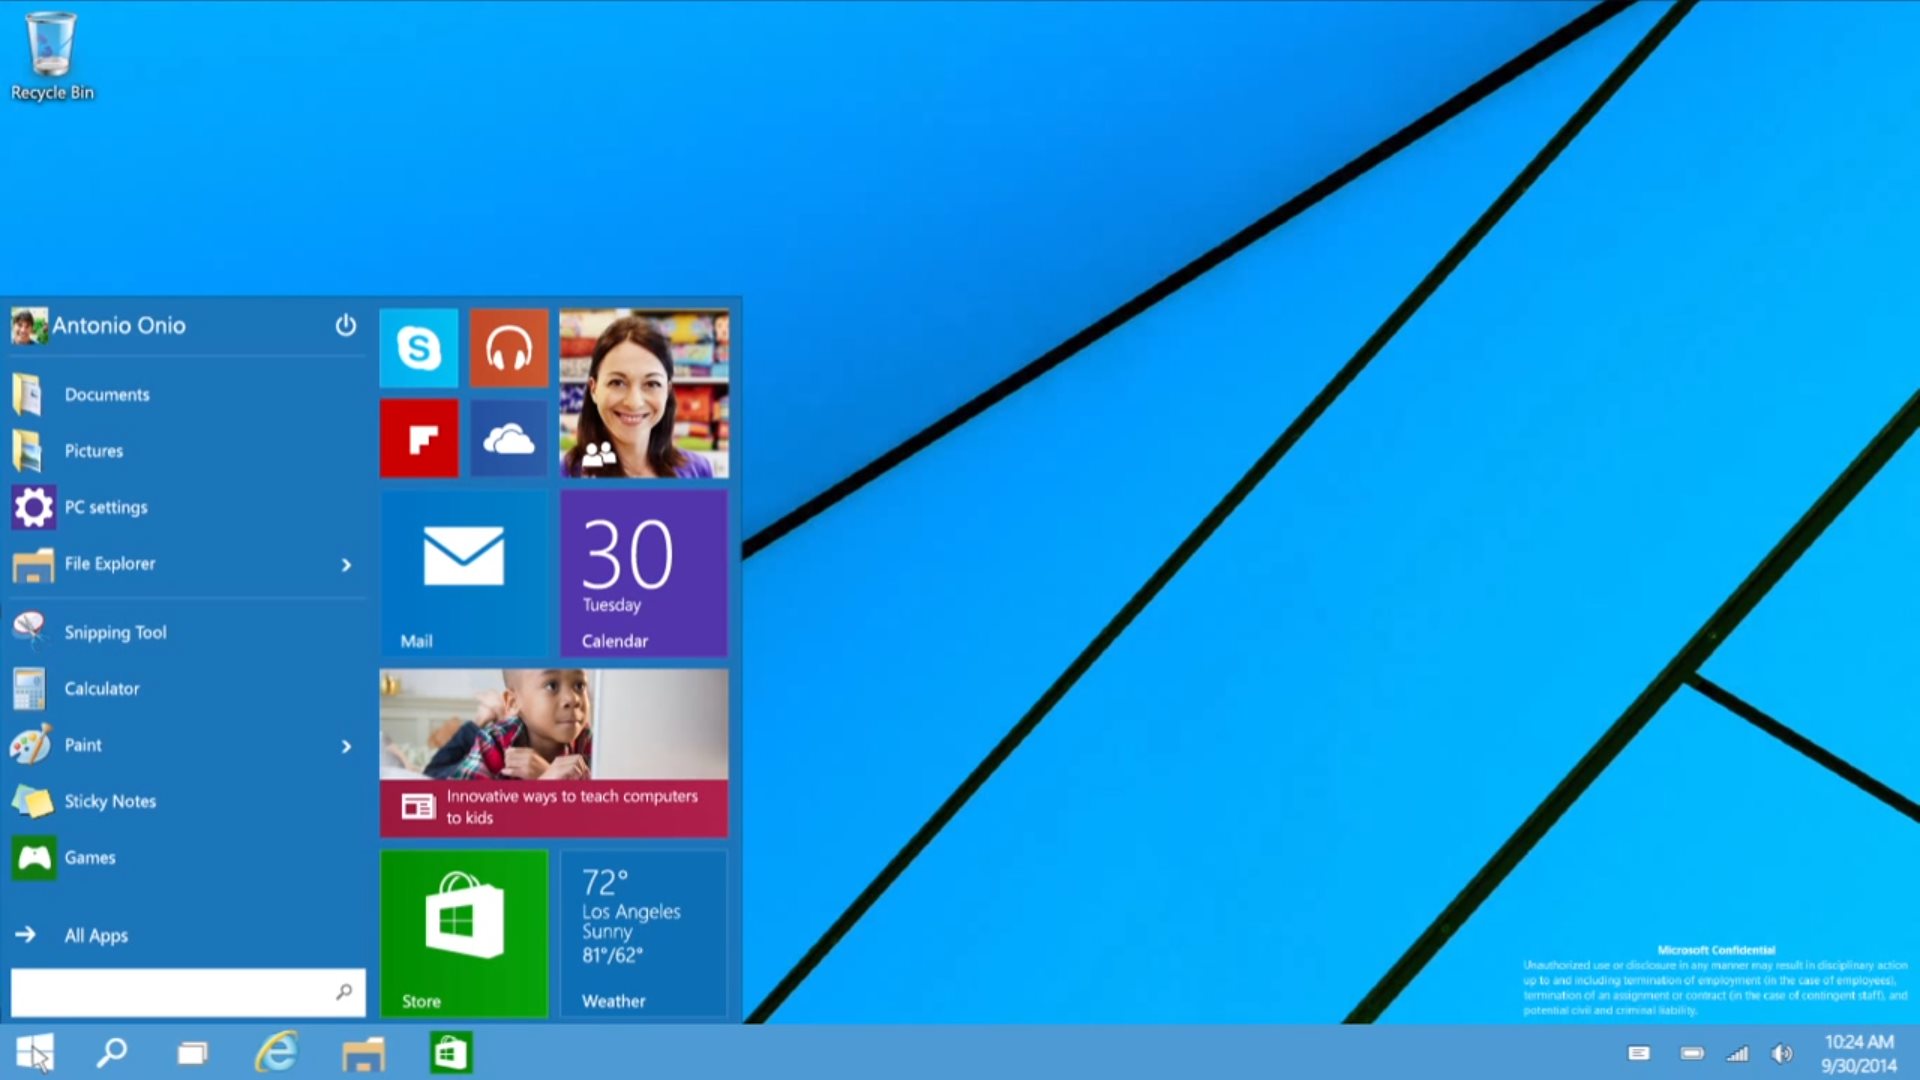 Windows 10 Charms Bar Removed No Start Screen For Desktops